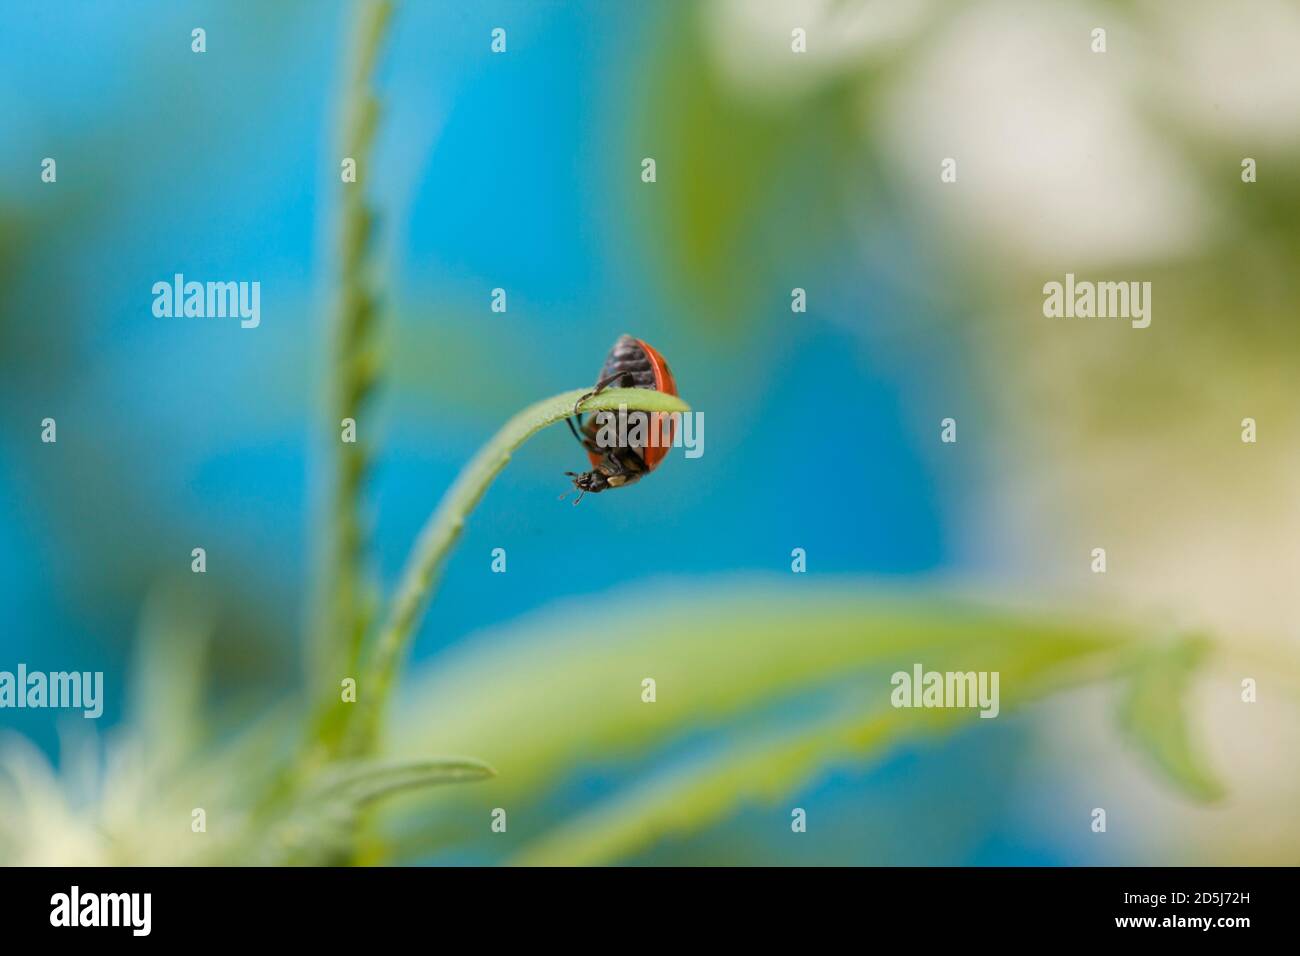 A Ladybird or Ladybug on a Cannabis plant,the marijuana is in flower. Stock Photo